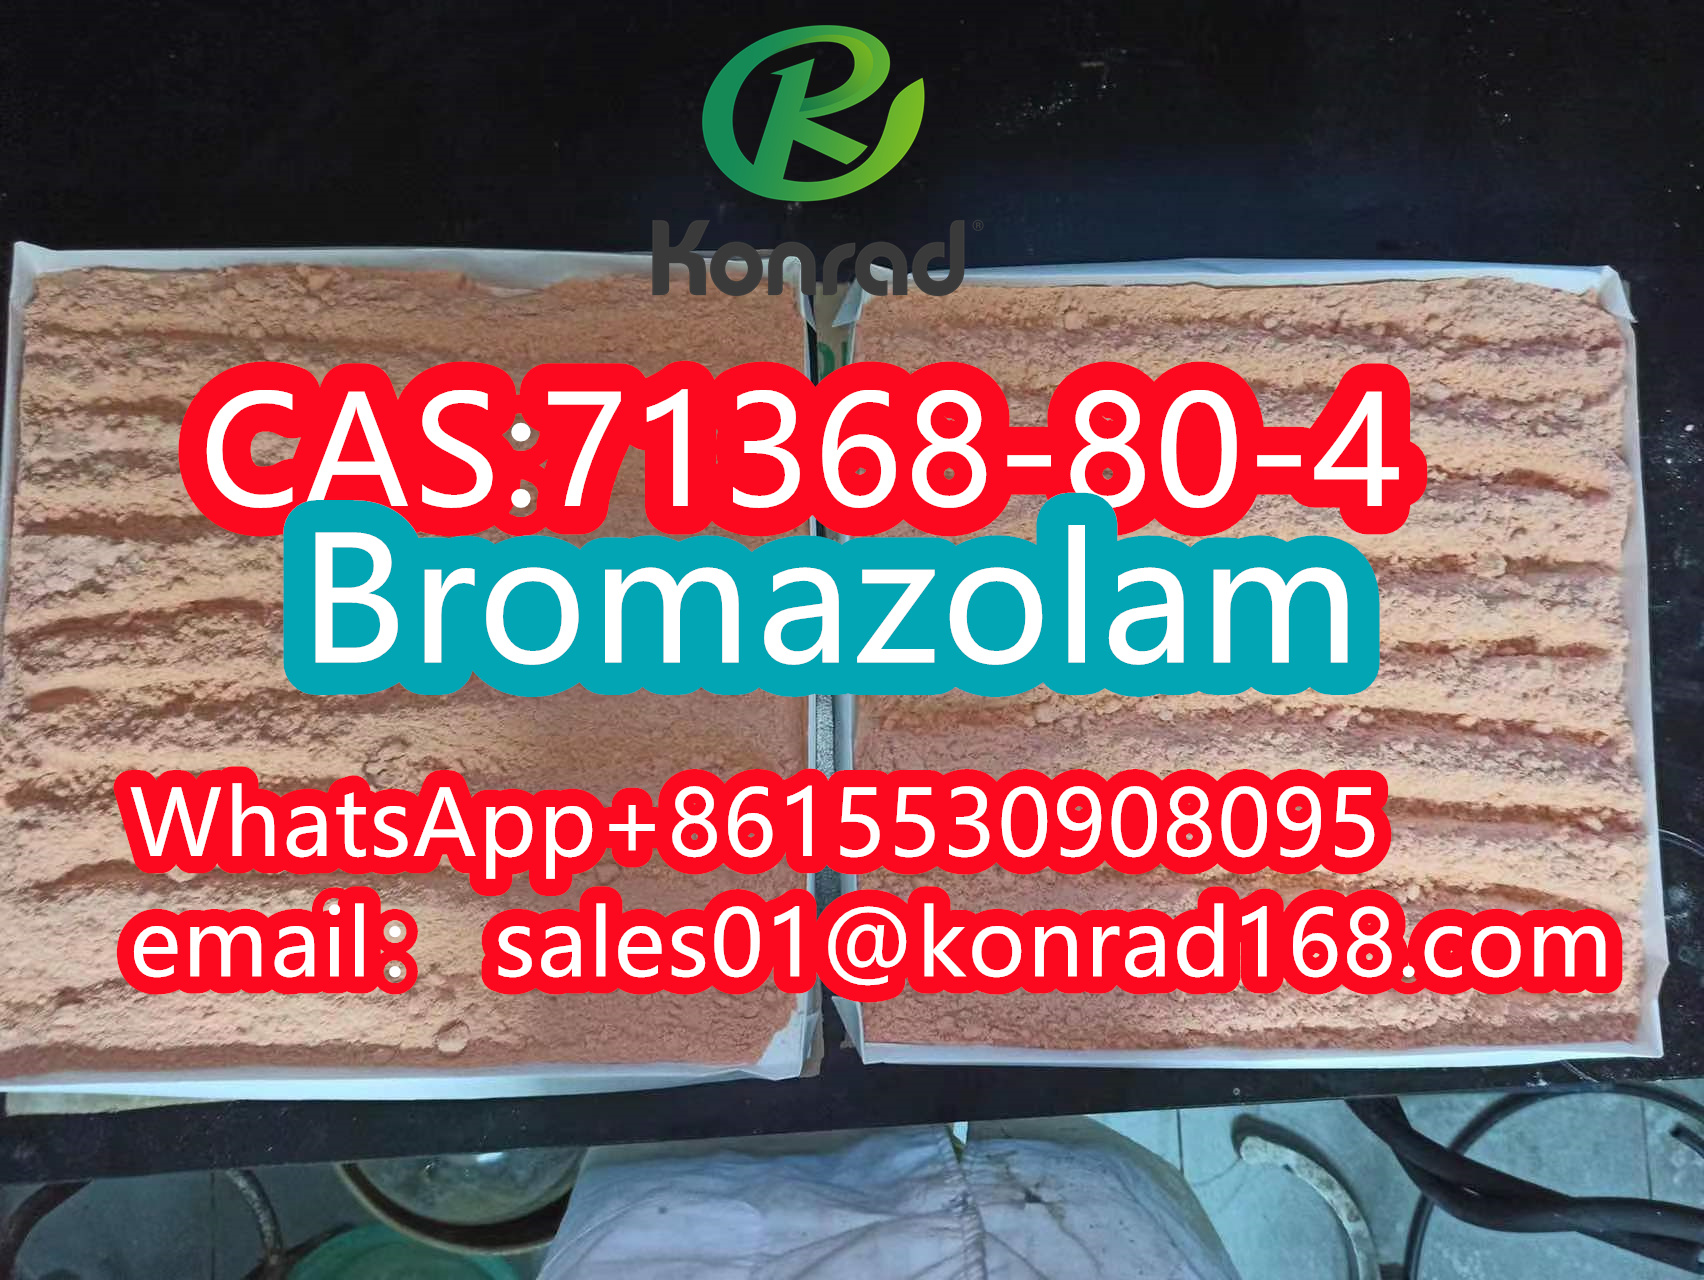 BromazolamCAS:71368-80-4